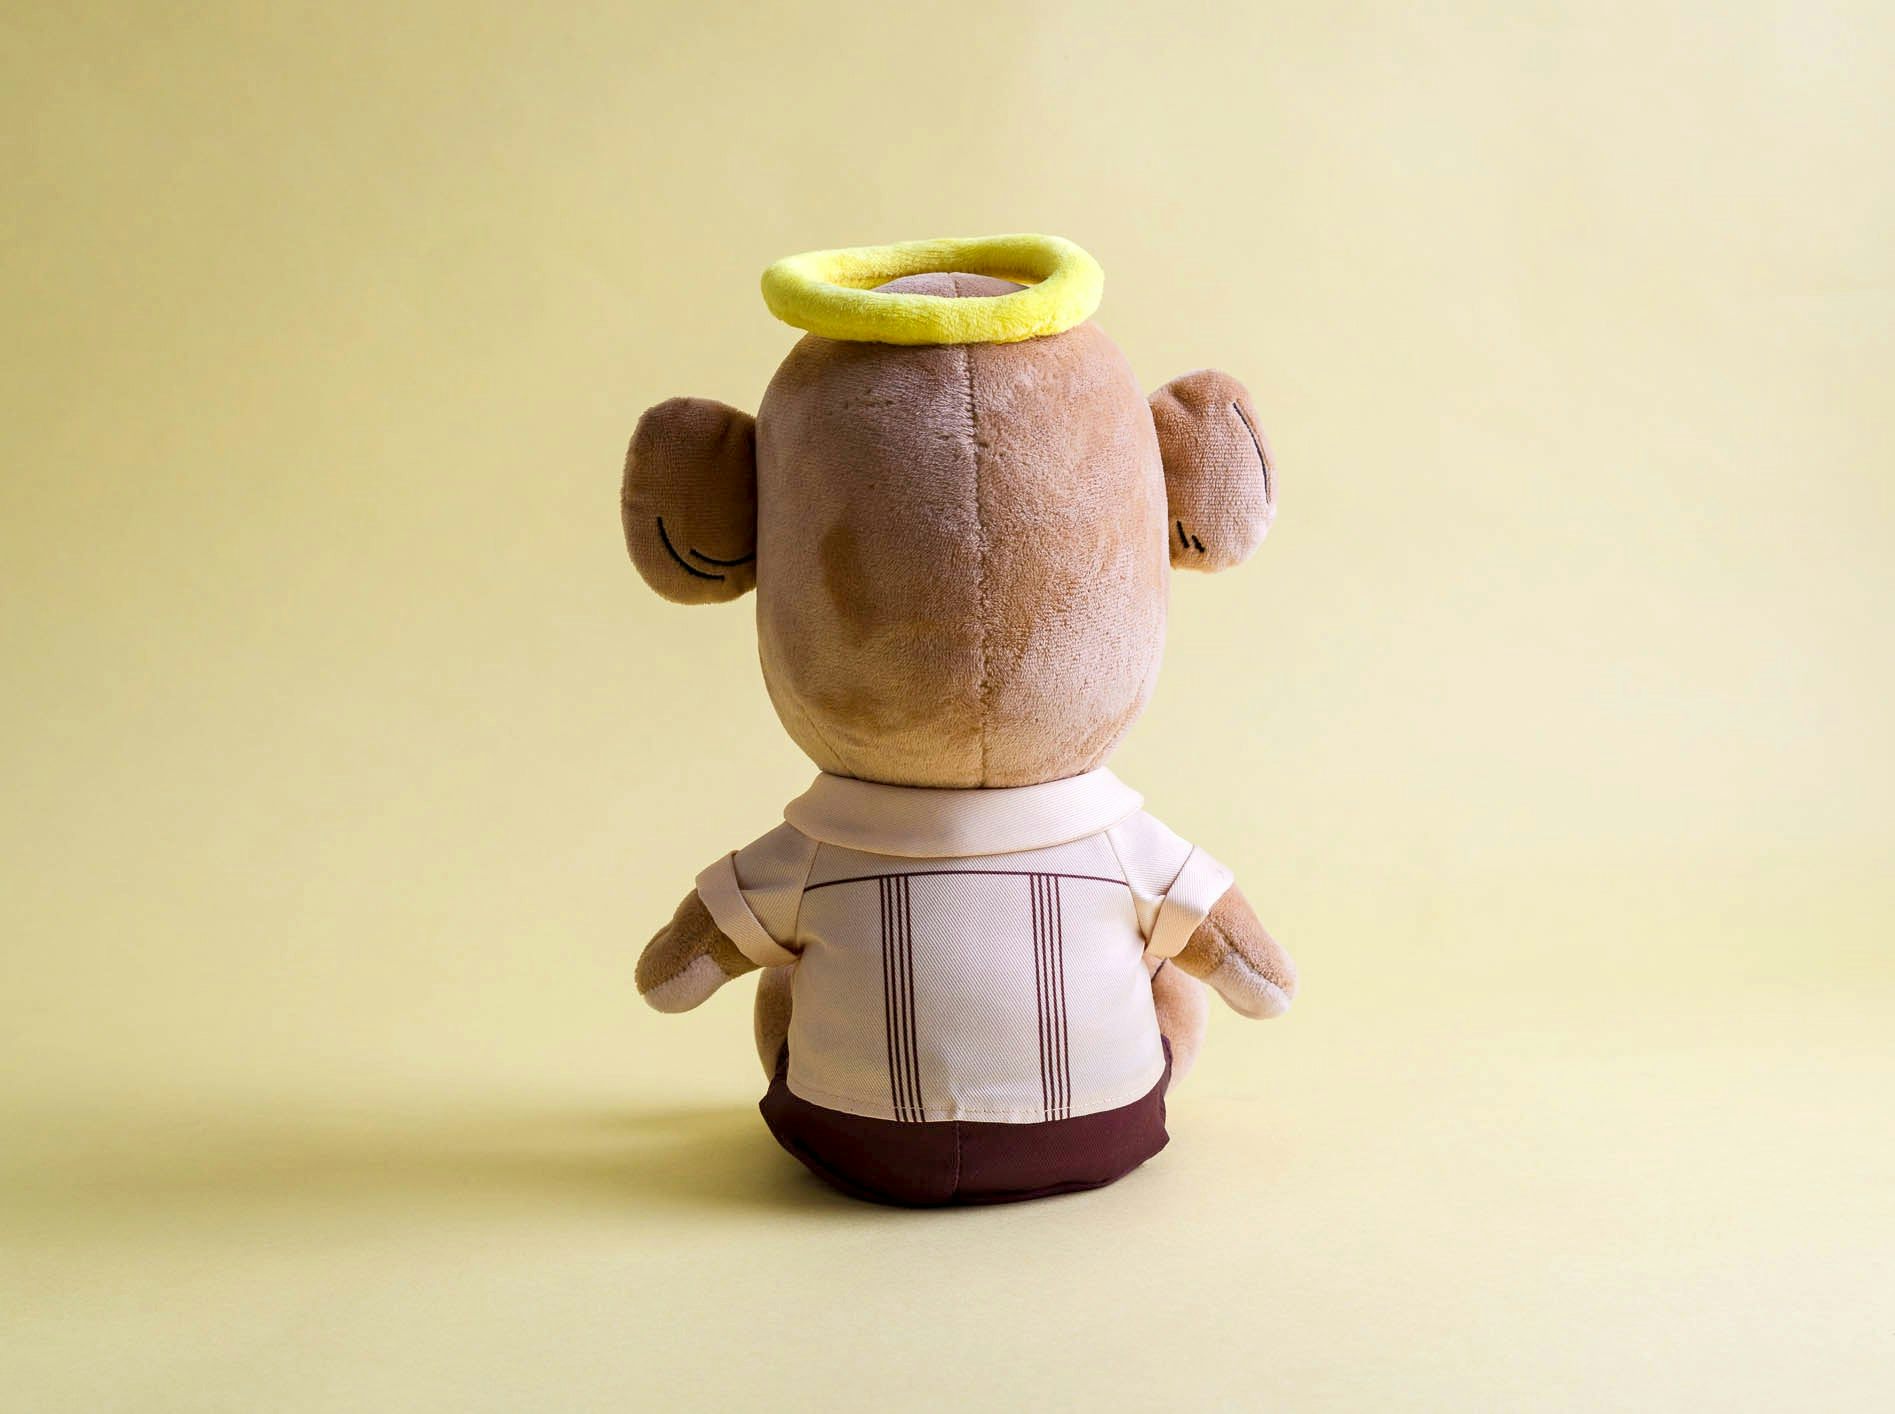 Manolo the Ape - Plush Toy